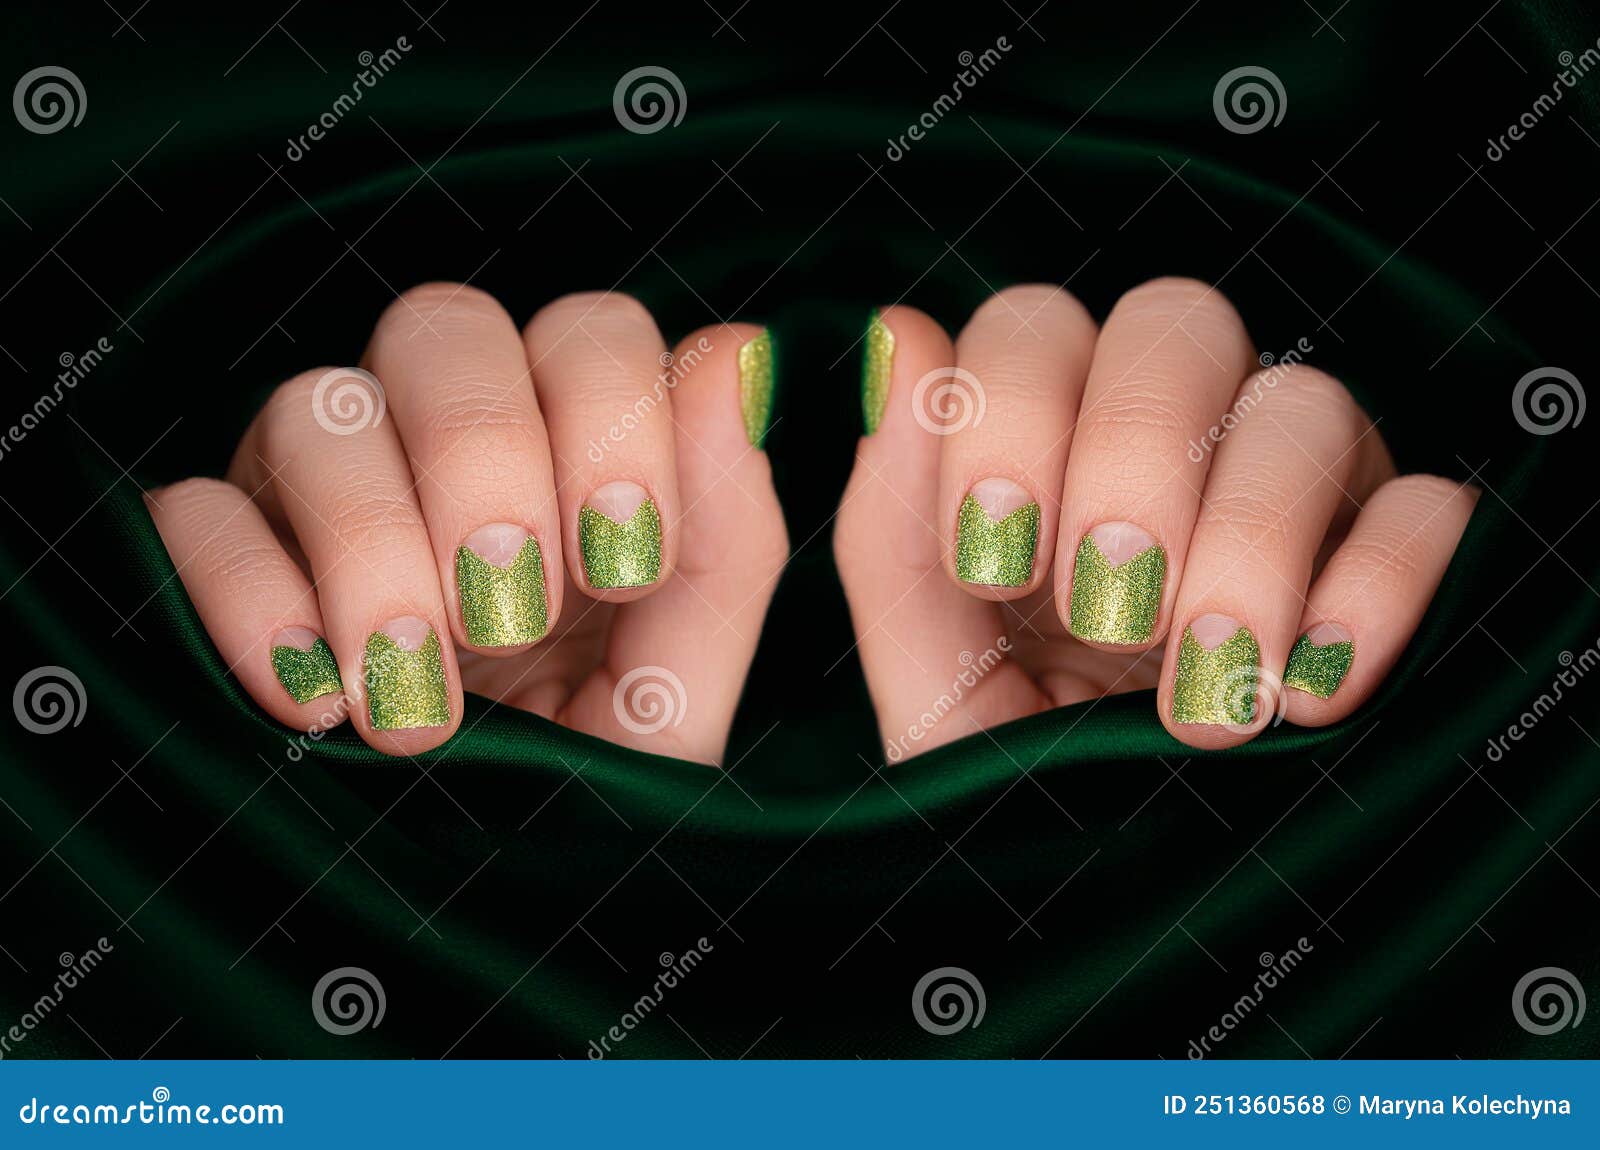 Joyous Emerald Green Nails To Intrigue - Nail Designs Journal